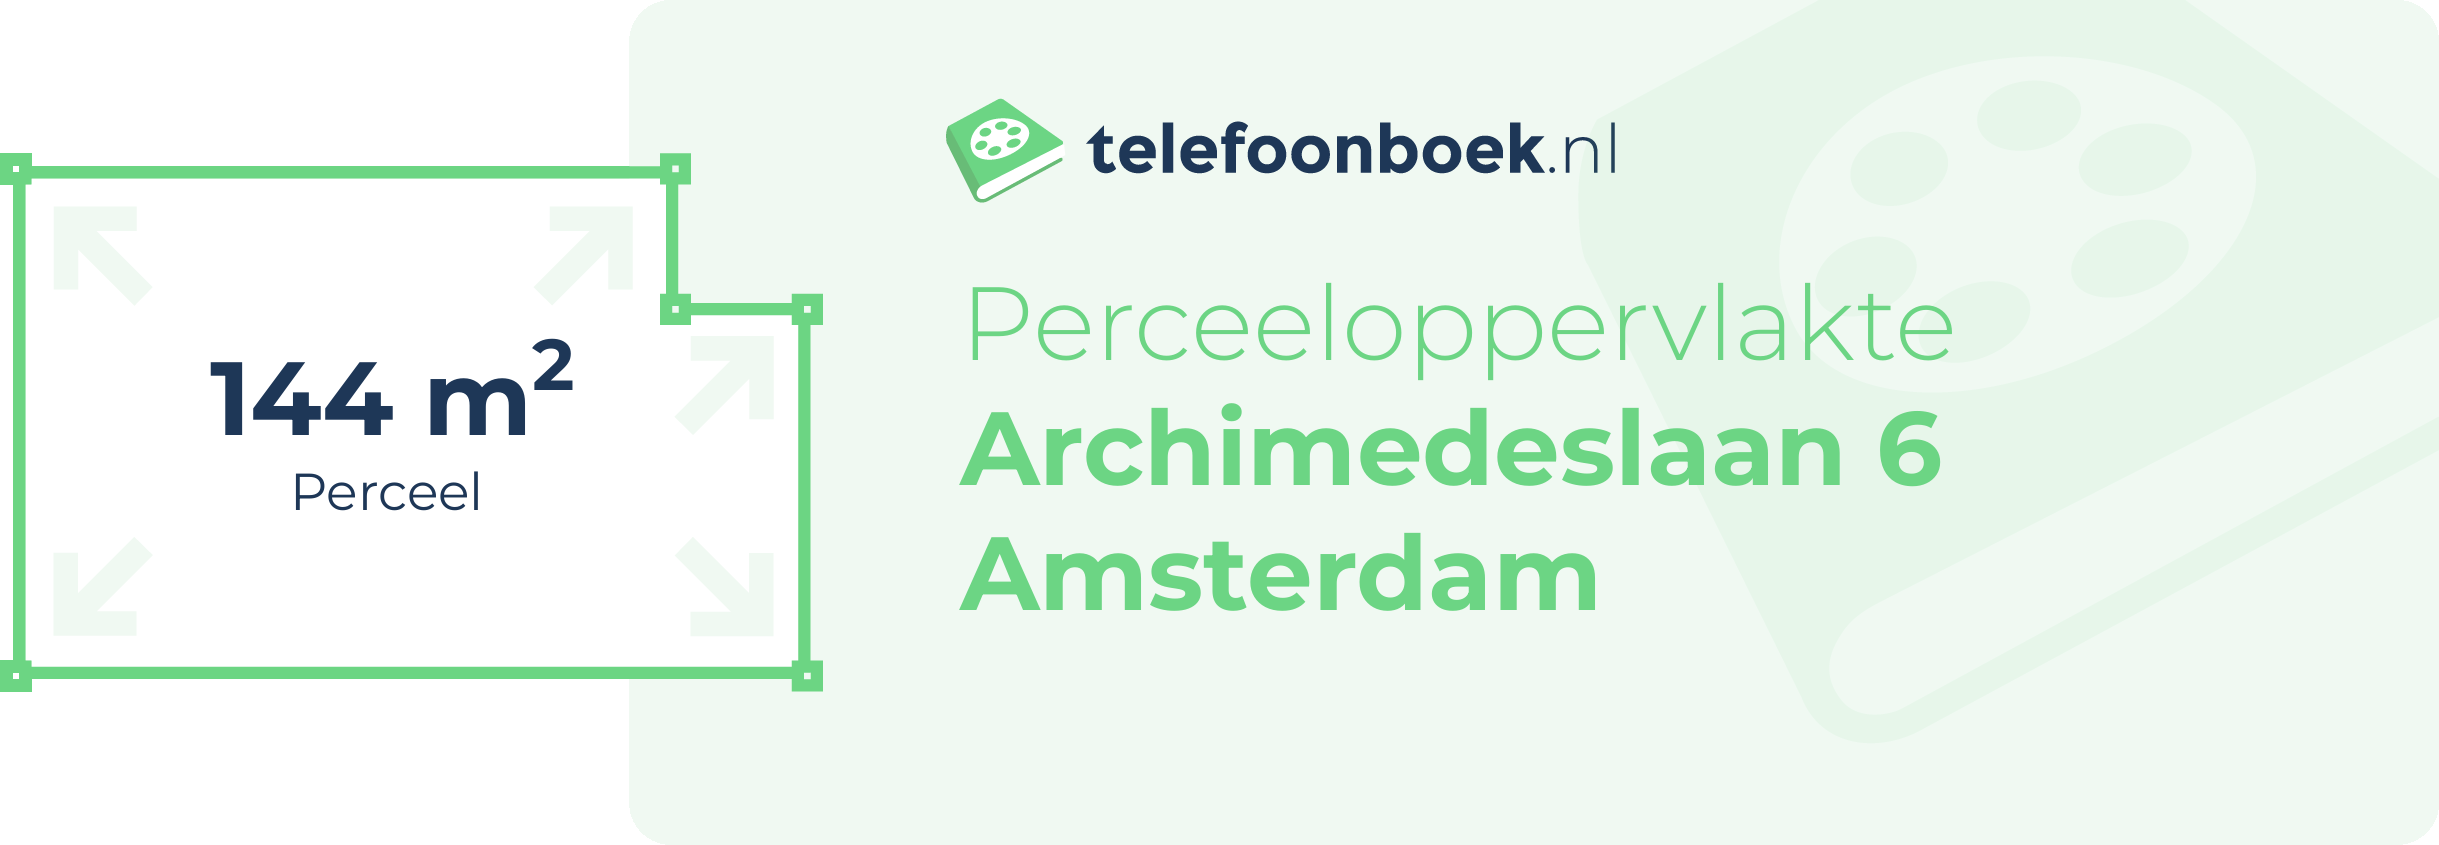 Perceeloppervlakte Archimedeslaan 6 Amsterdam